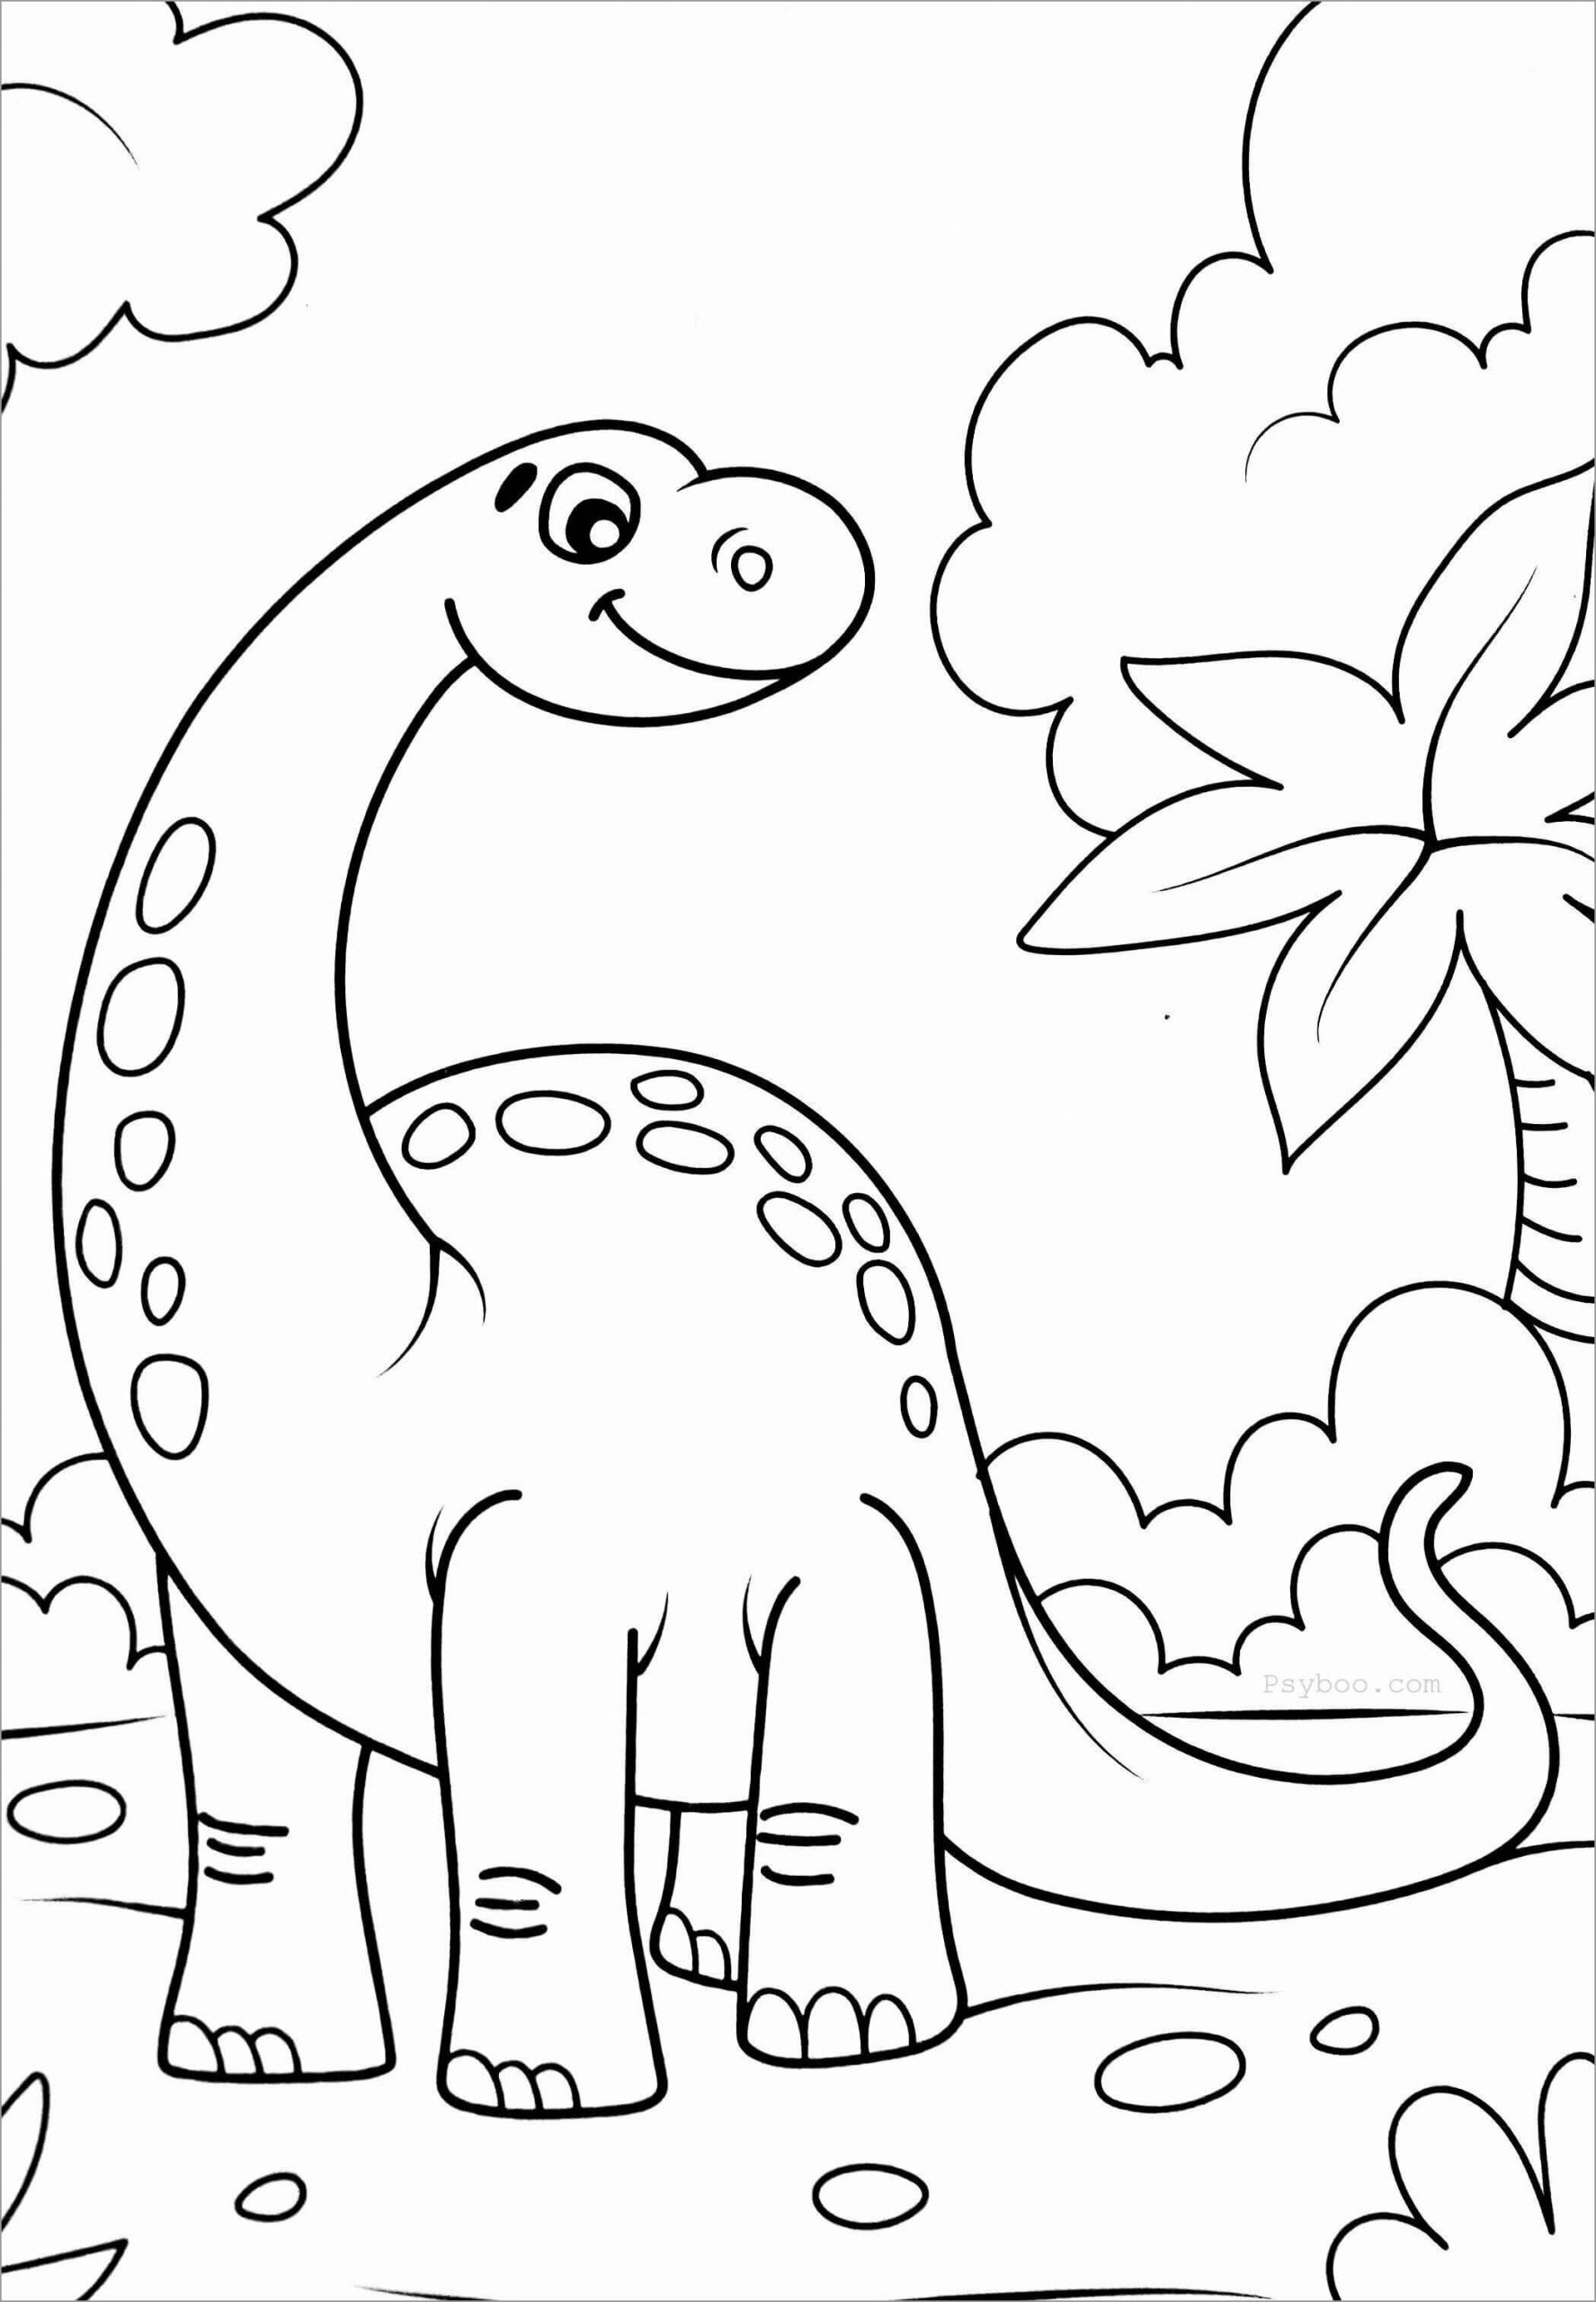 Smiling Long neck Dinosaur